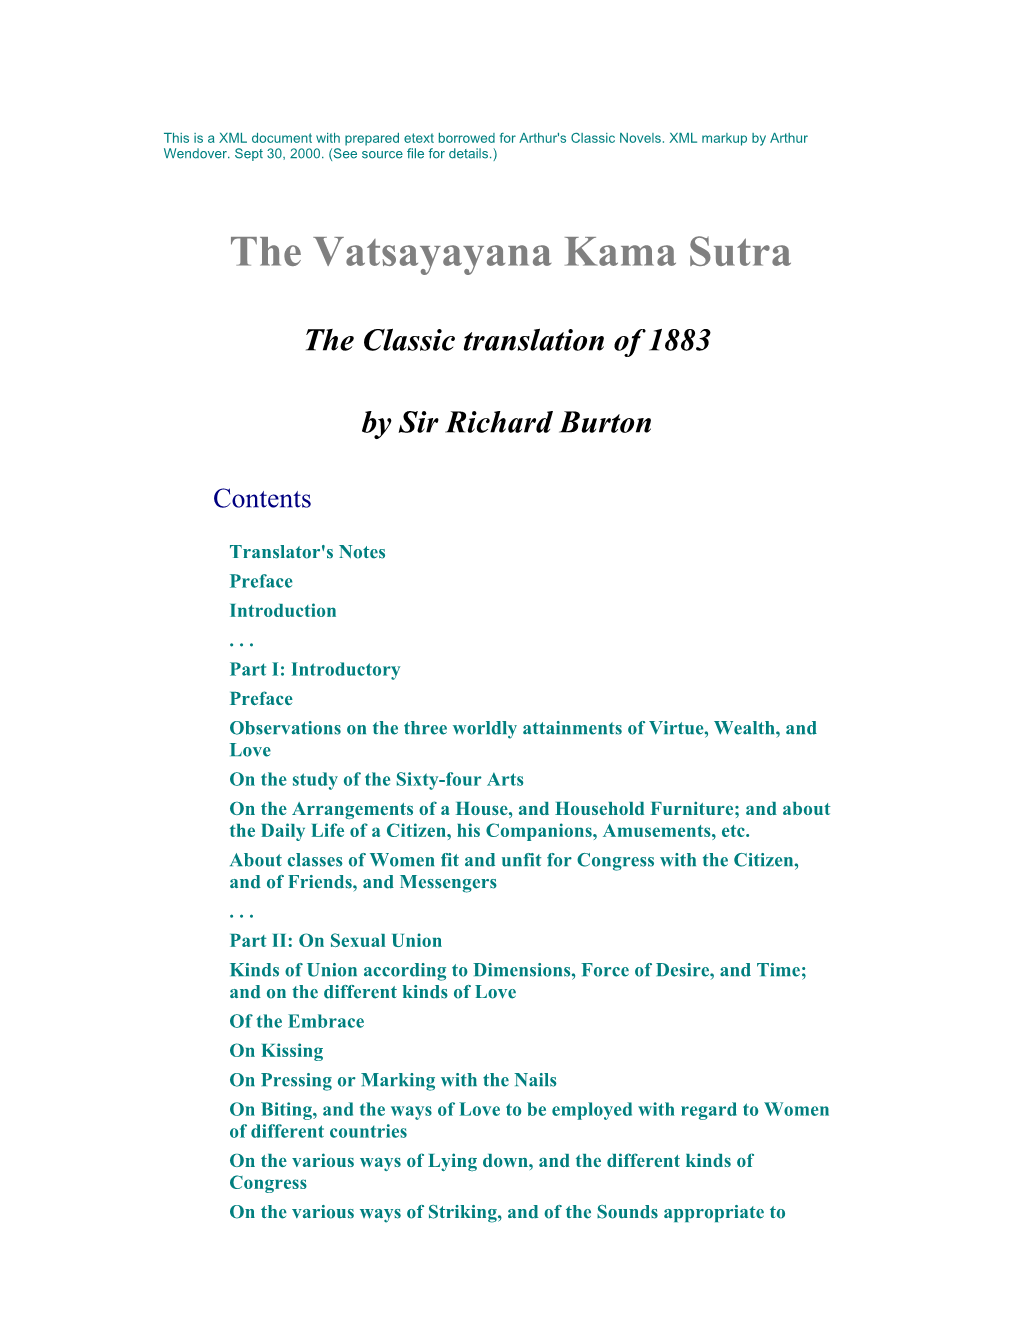 The Vatsayayana Kama Sutra